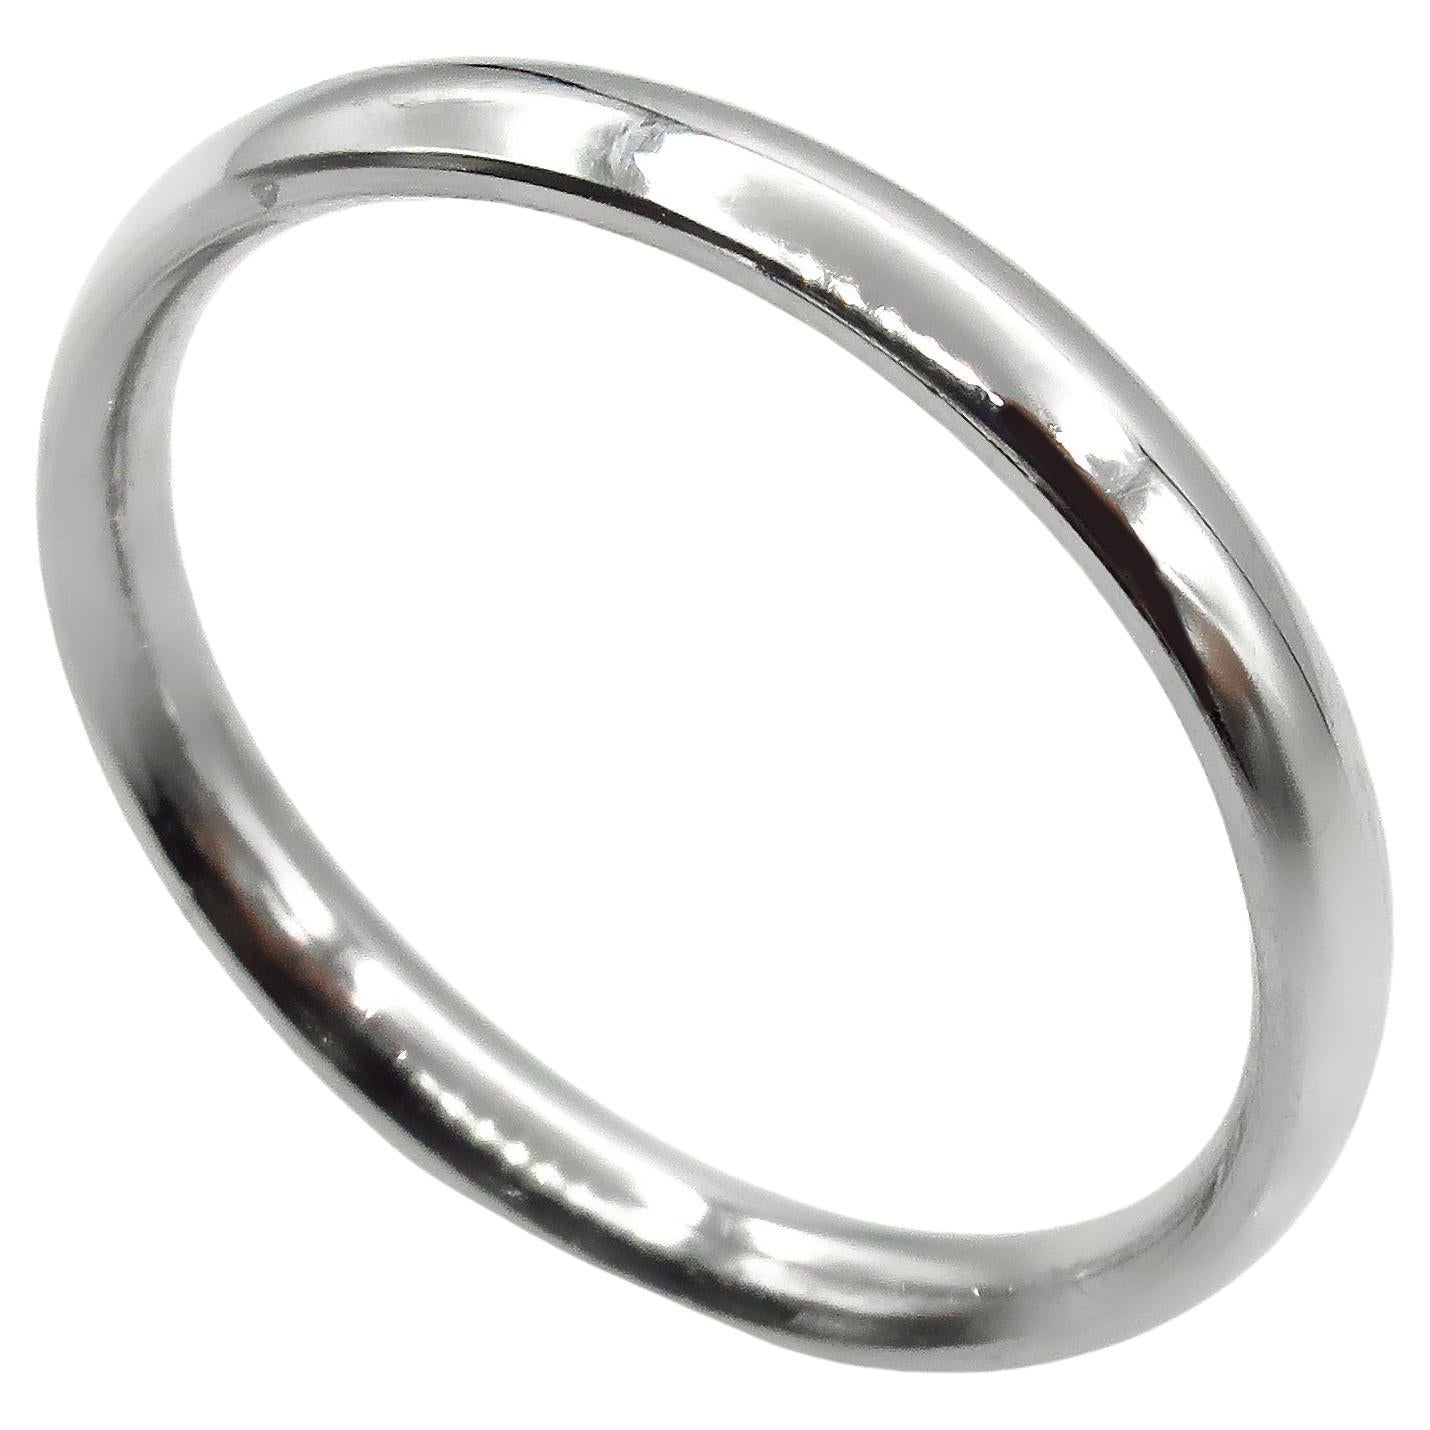 Benchmark 3mm, size 10 Solid Platinum 950 Plain Wedding Band Ring Comfort Fit For Sale